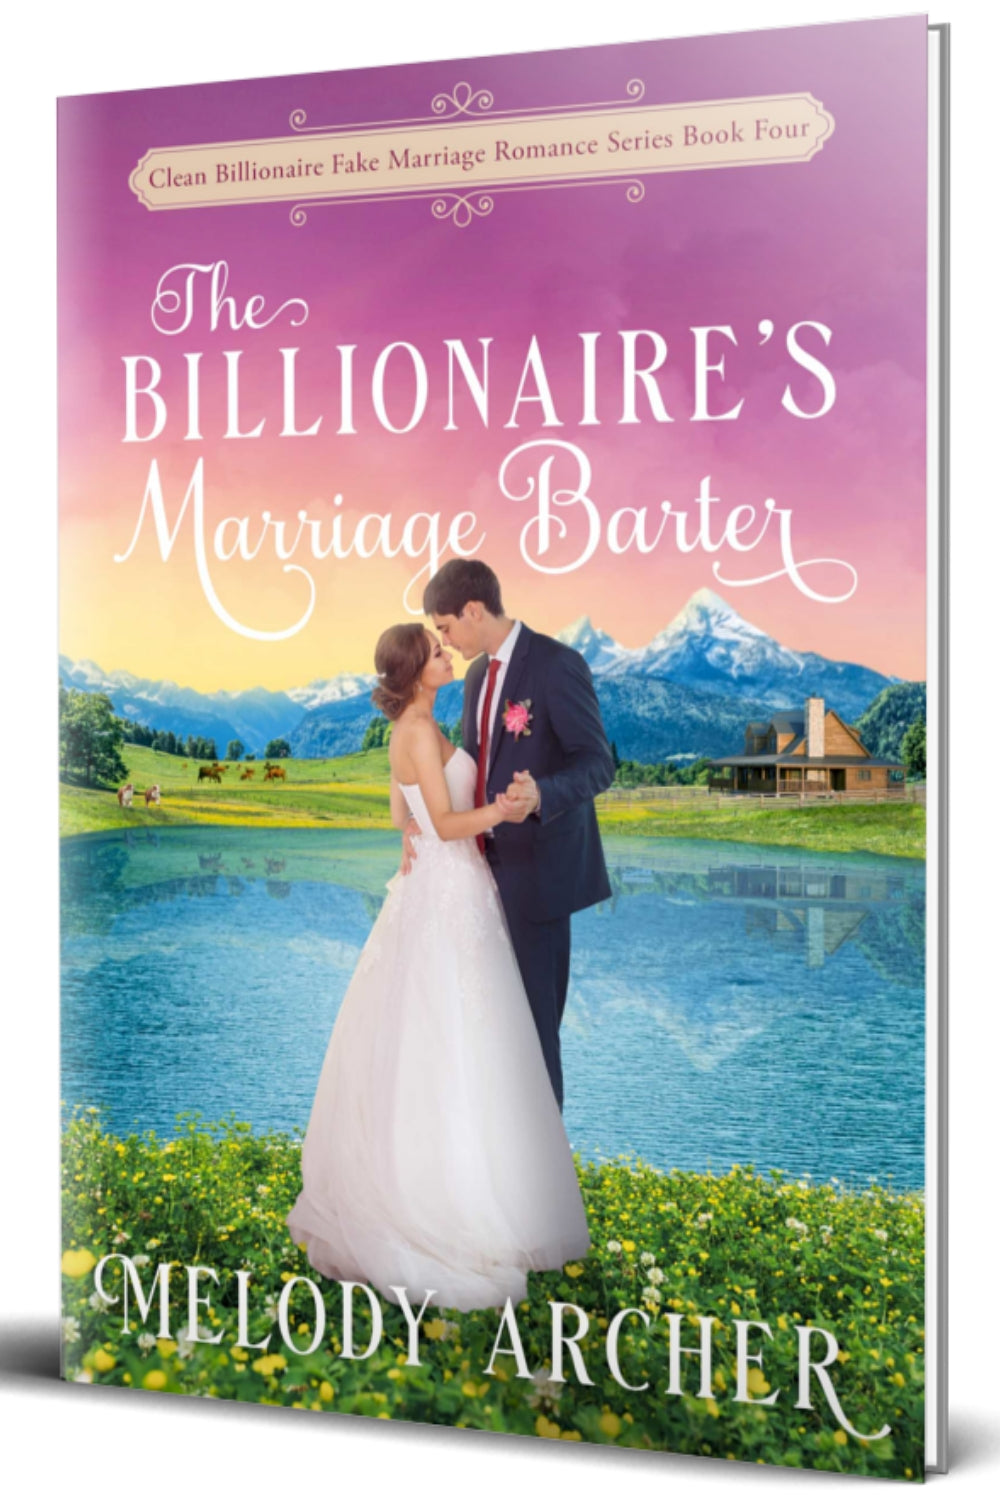 Clean Billionaire Fake Marriage Romance Book #4. Paperback Book.